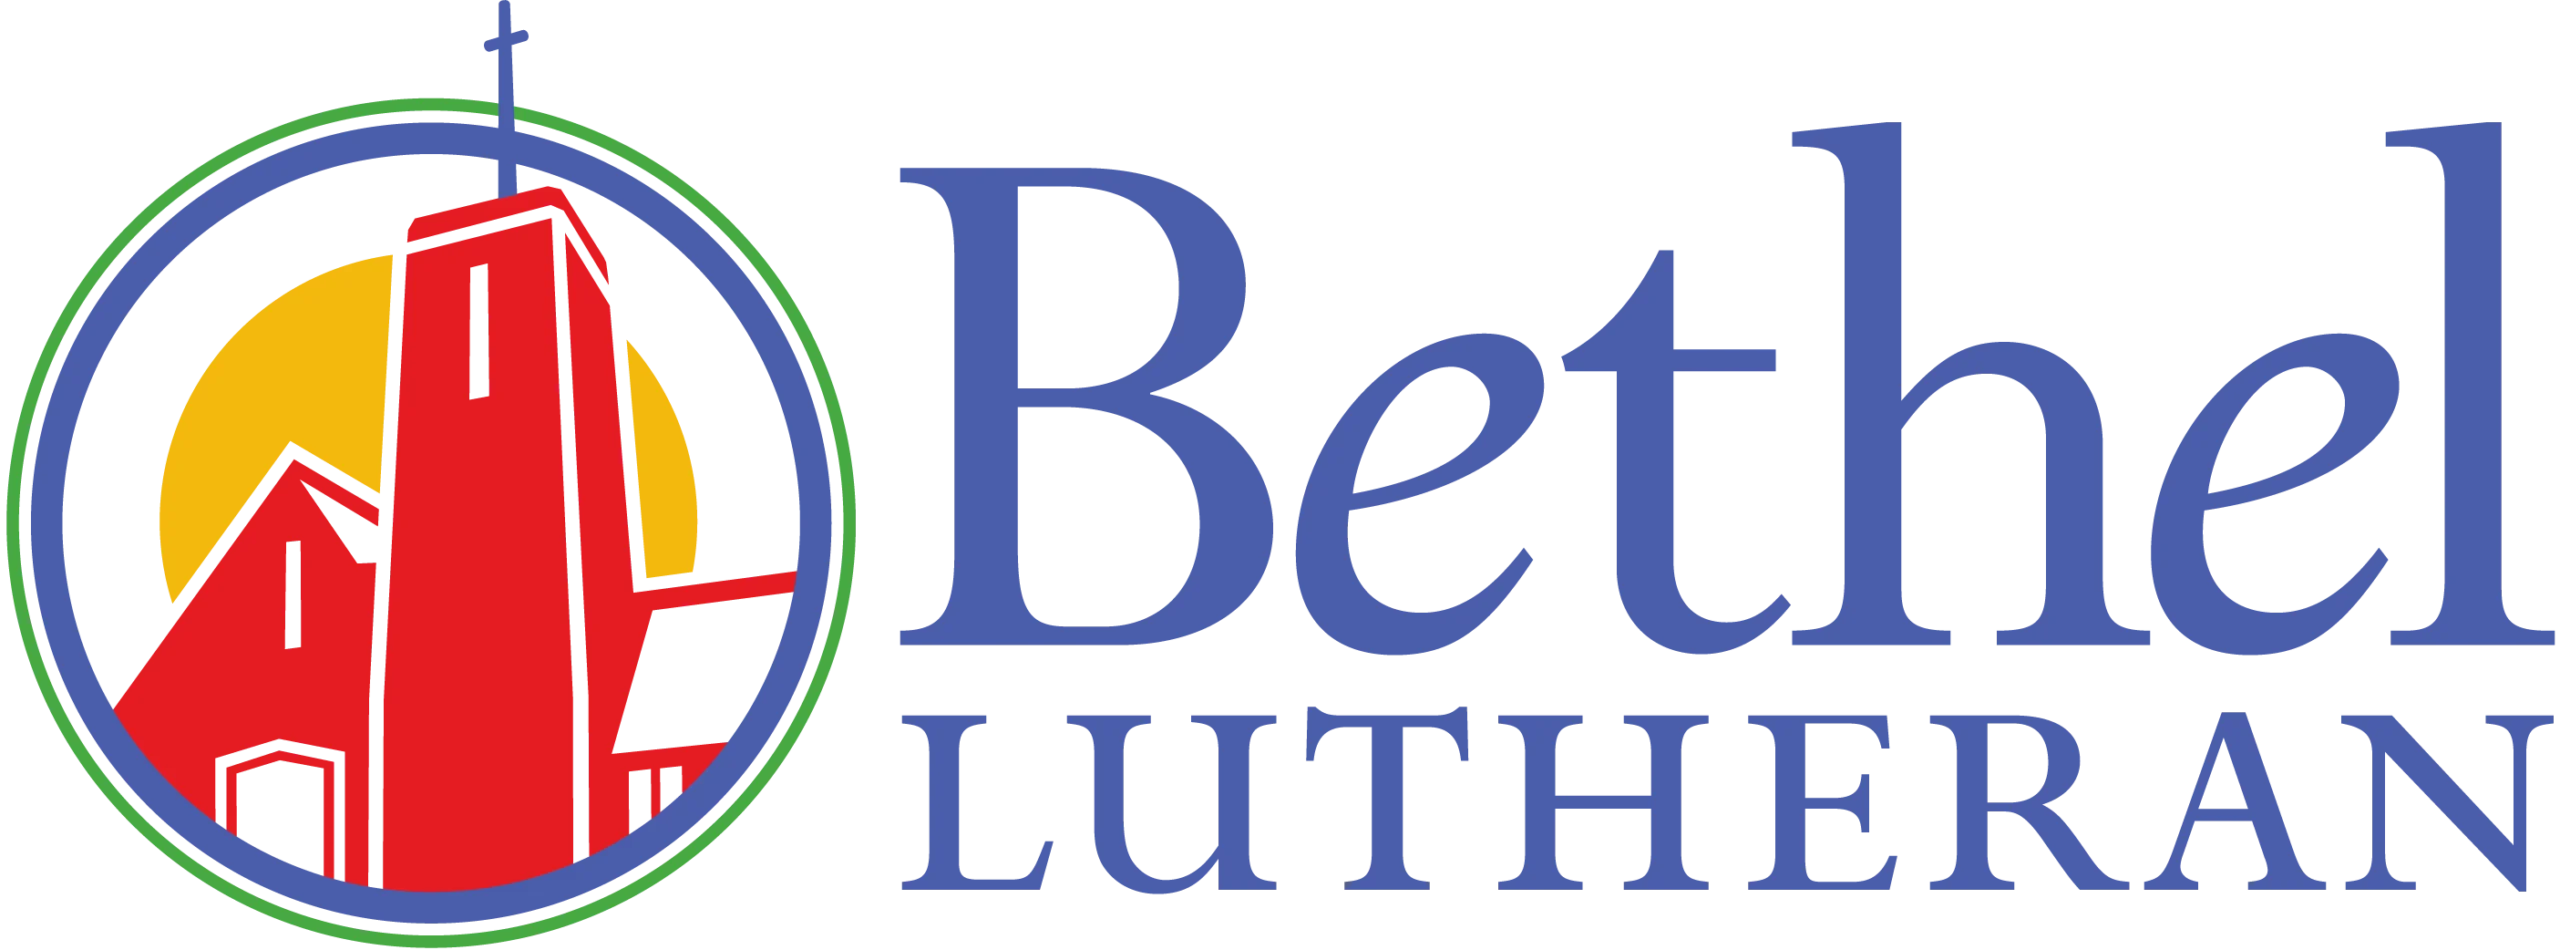 Bethel Lutheran Church Logo